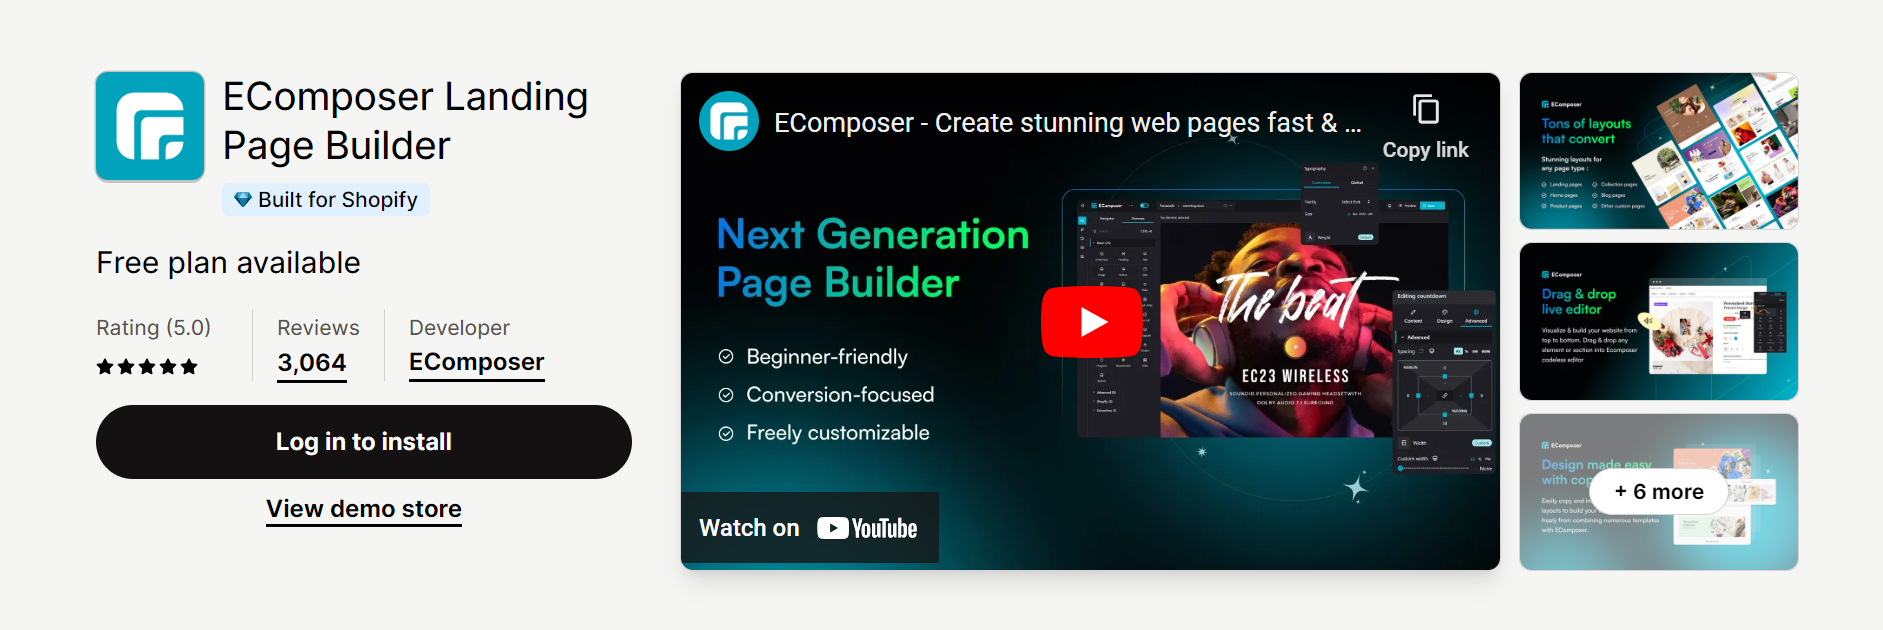 EComposer Landing Page Builder